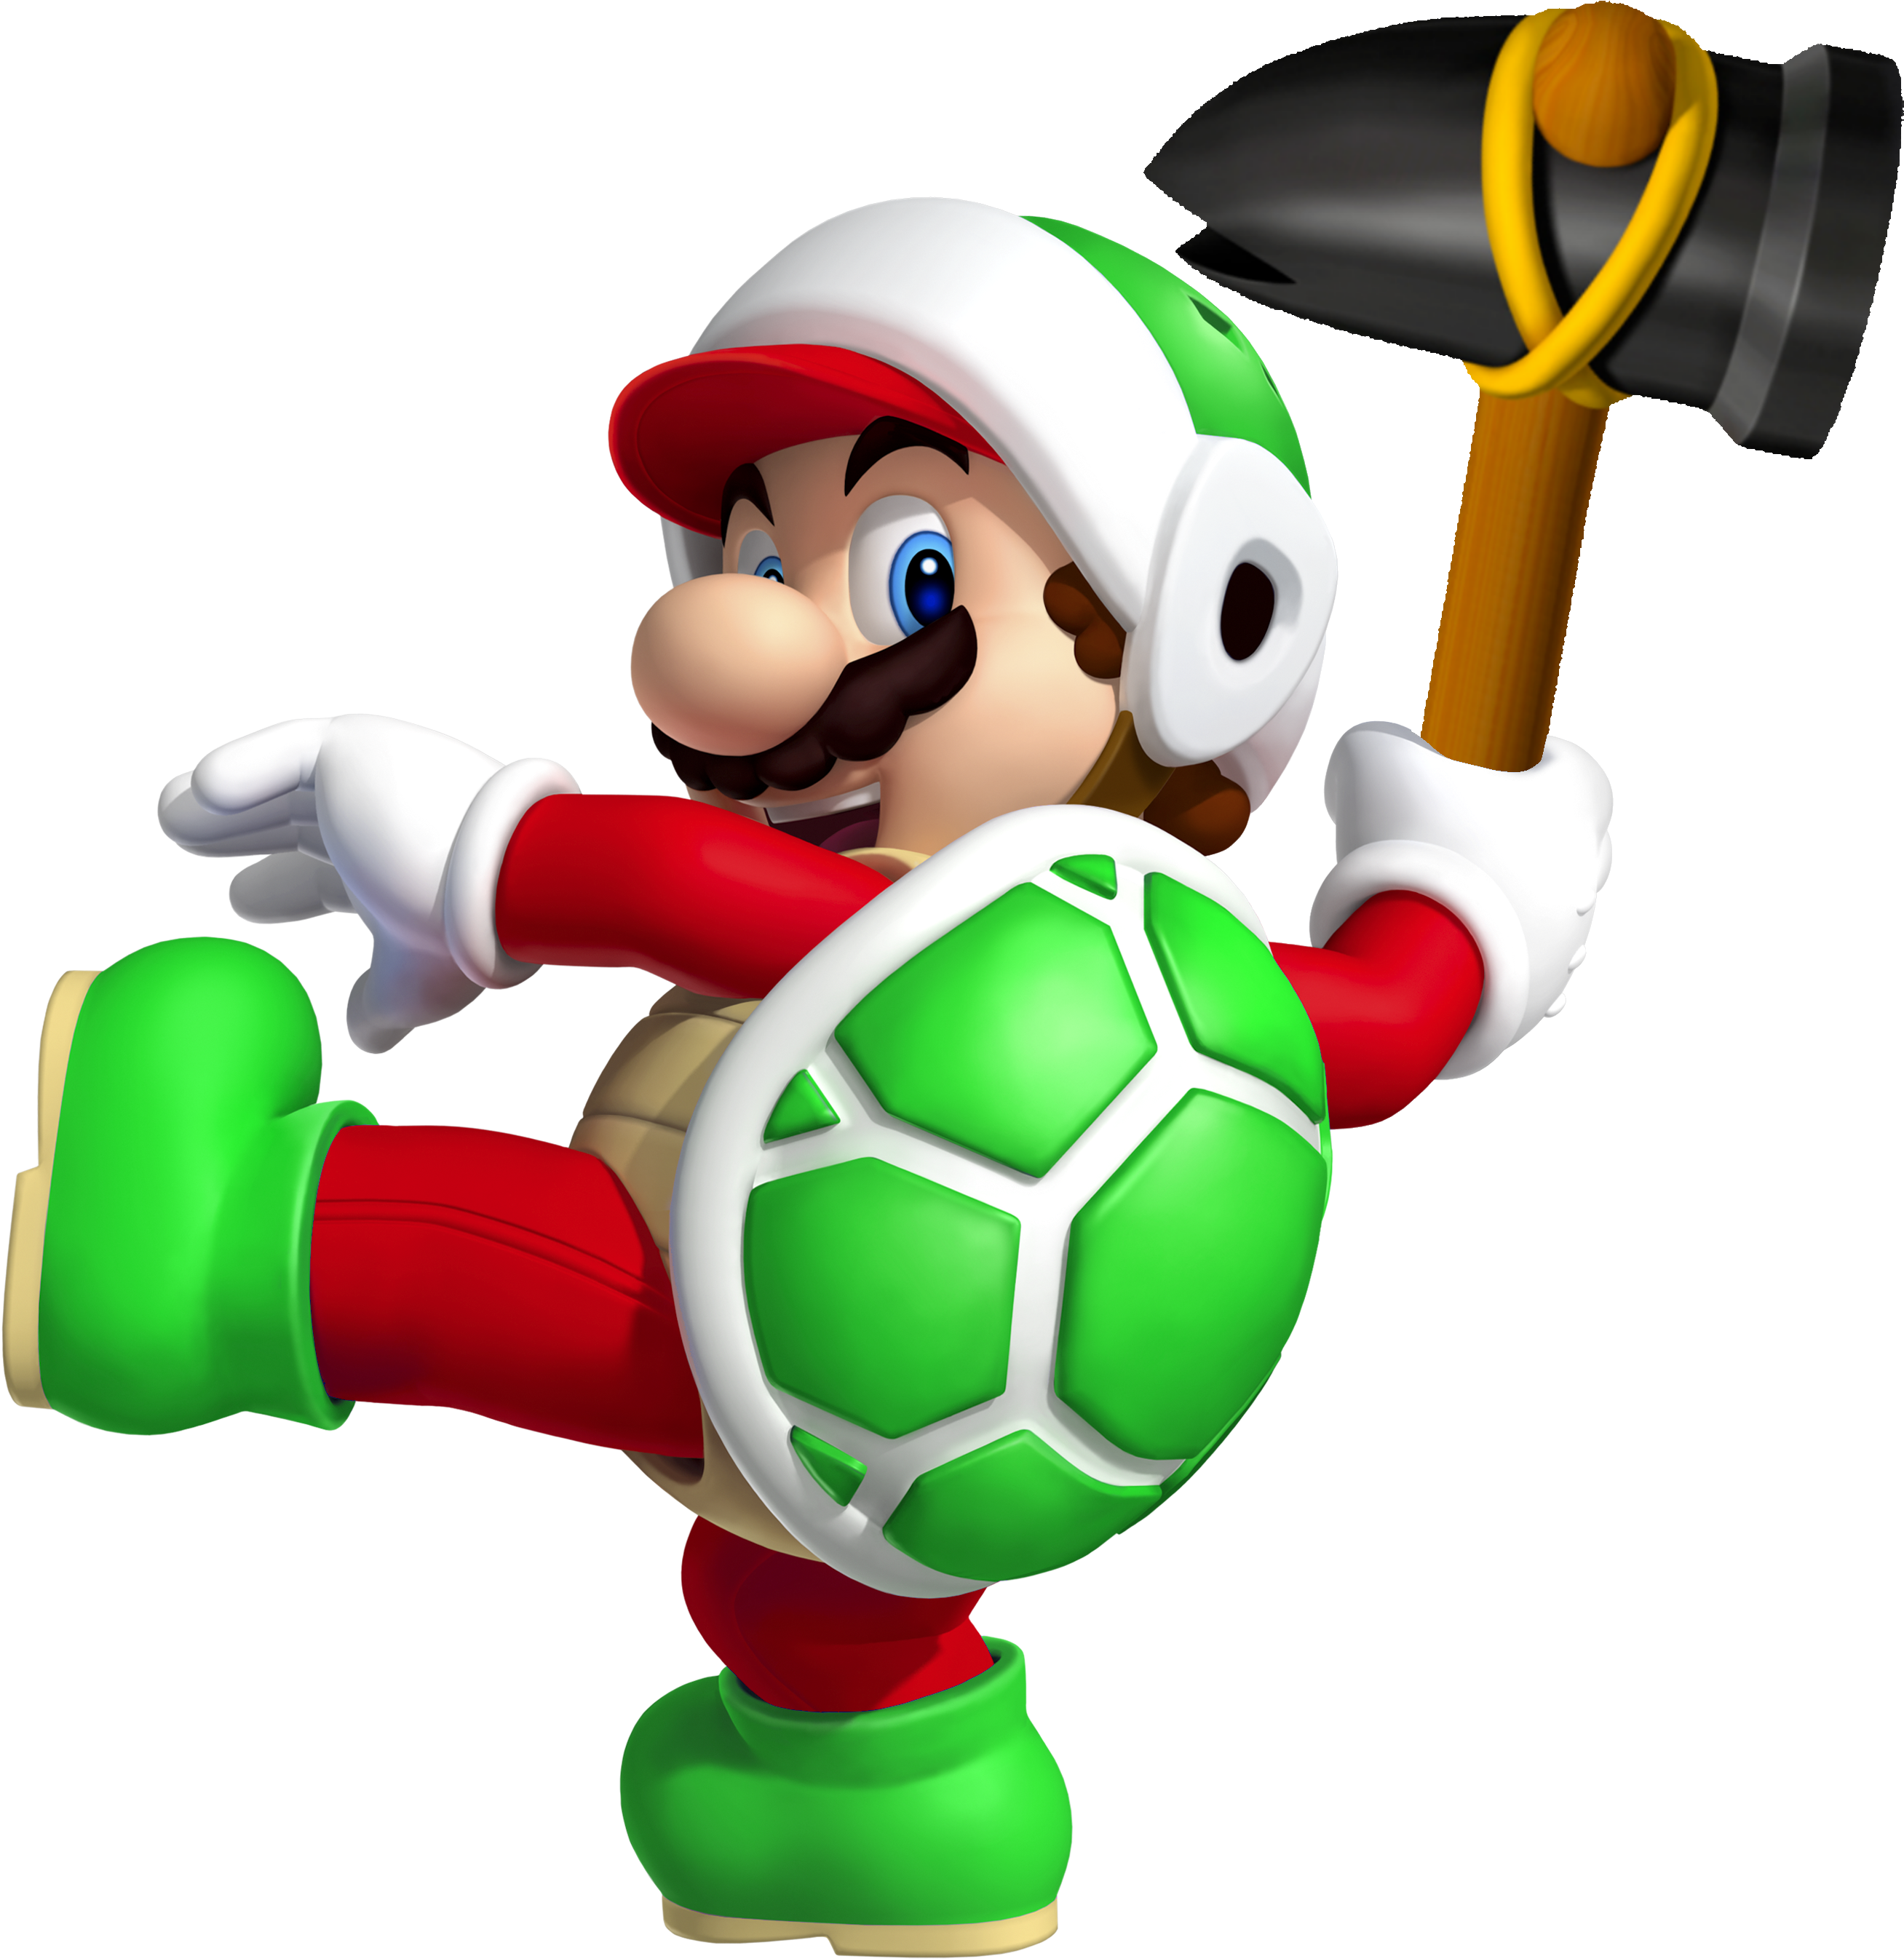 Hammer Mario - Sledge Bro Mario (2657x2977)